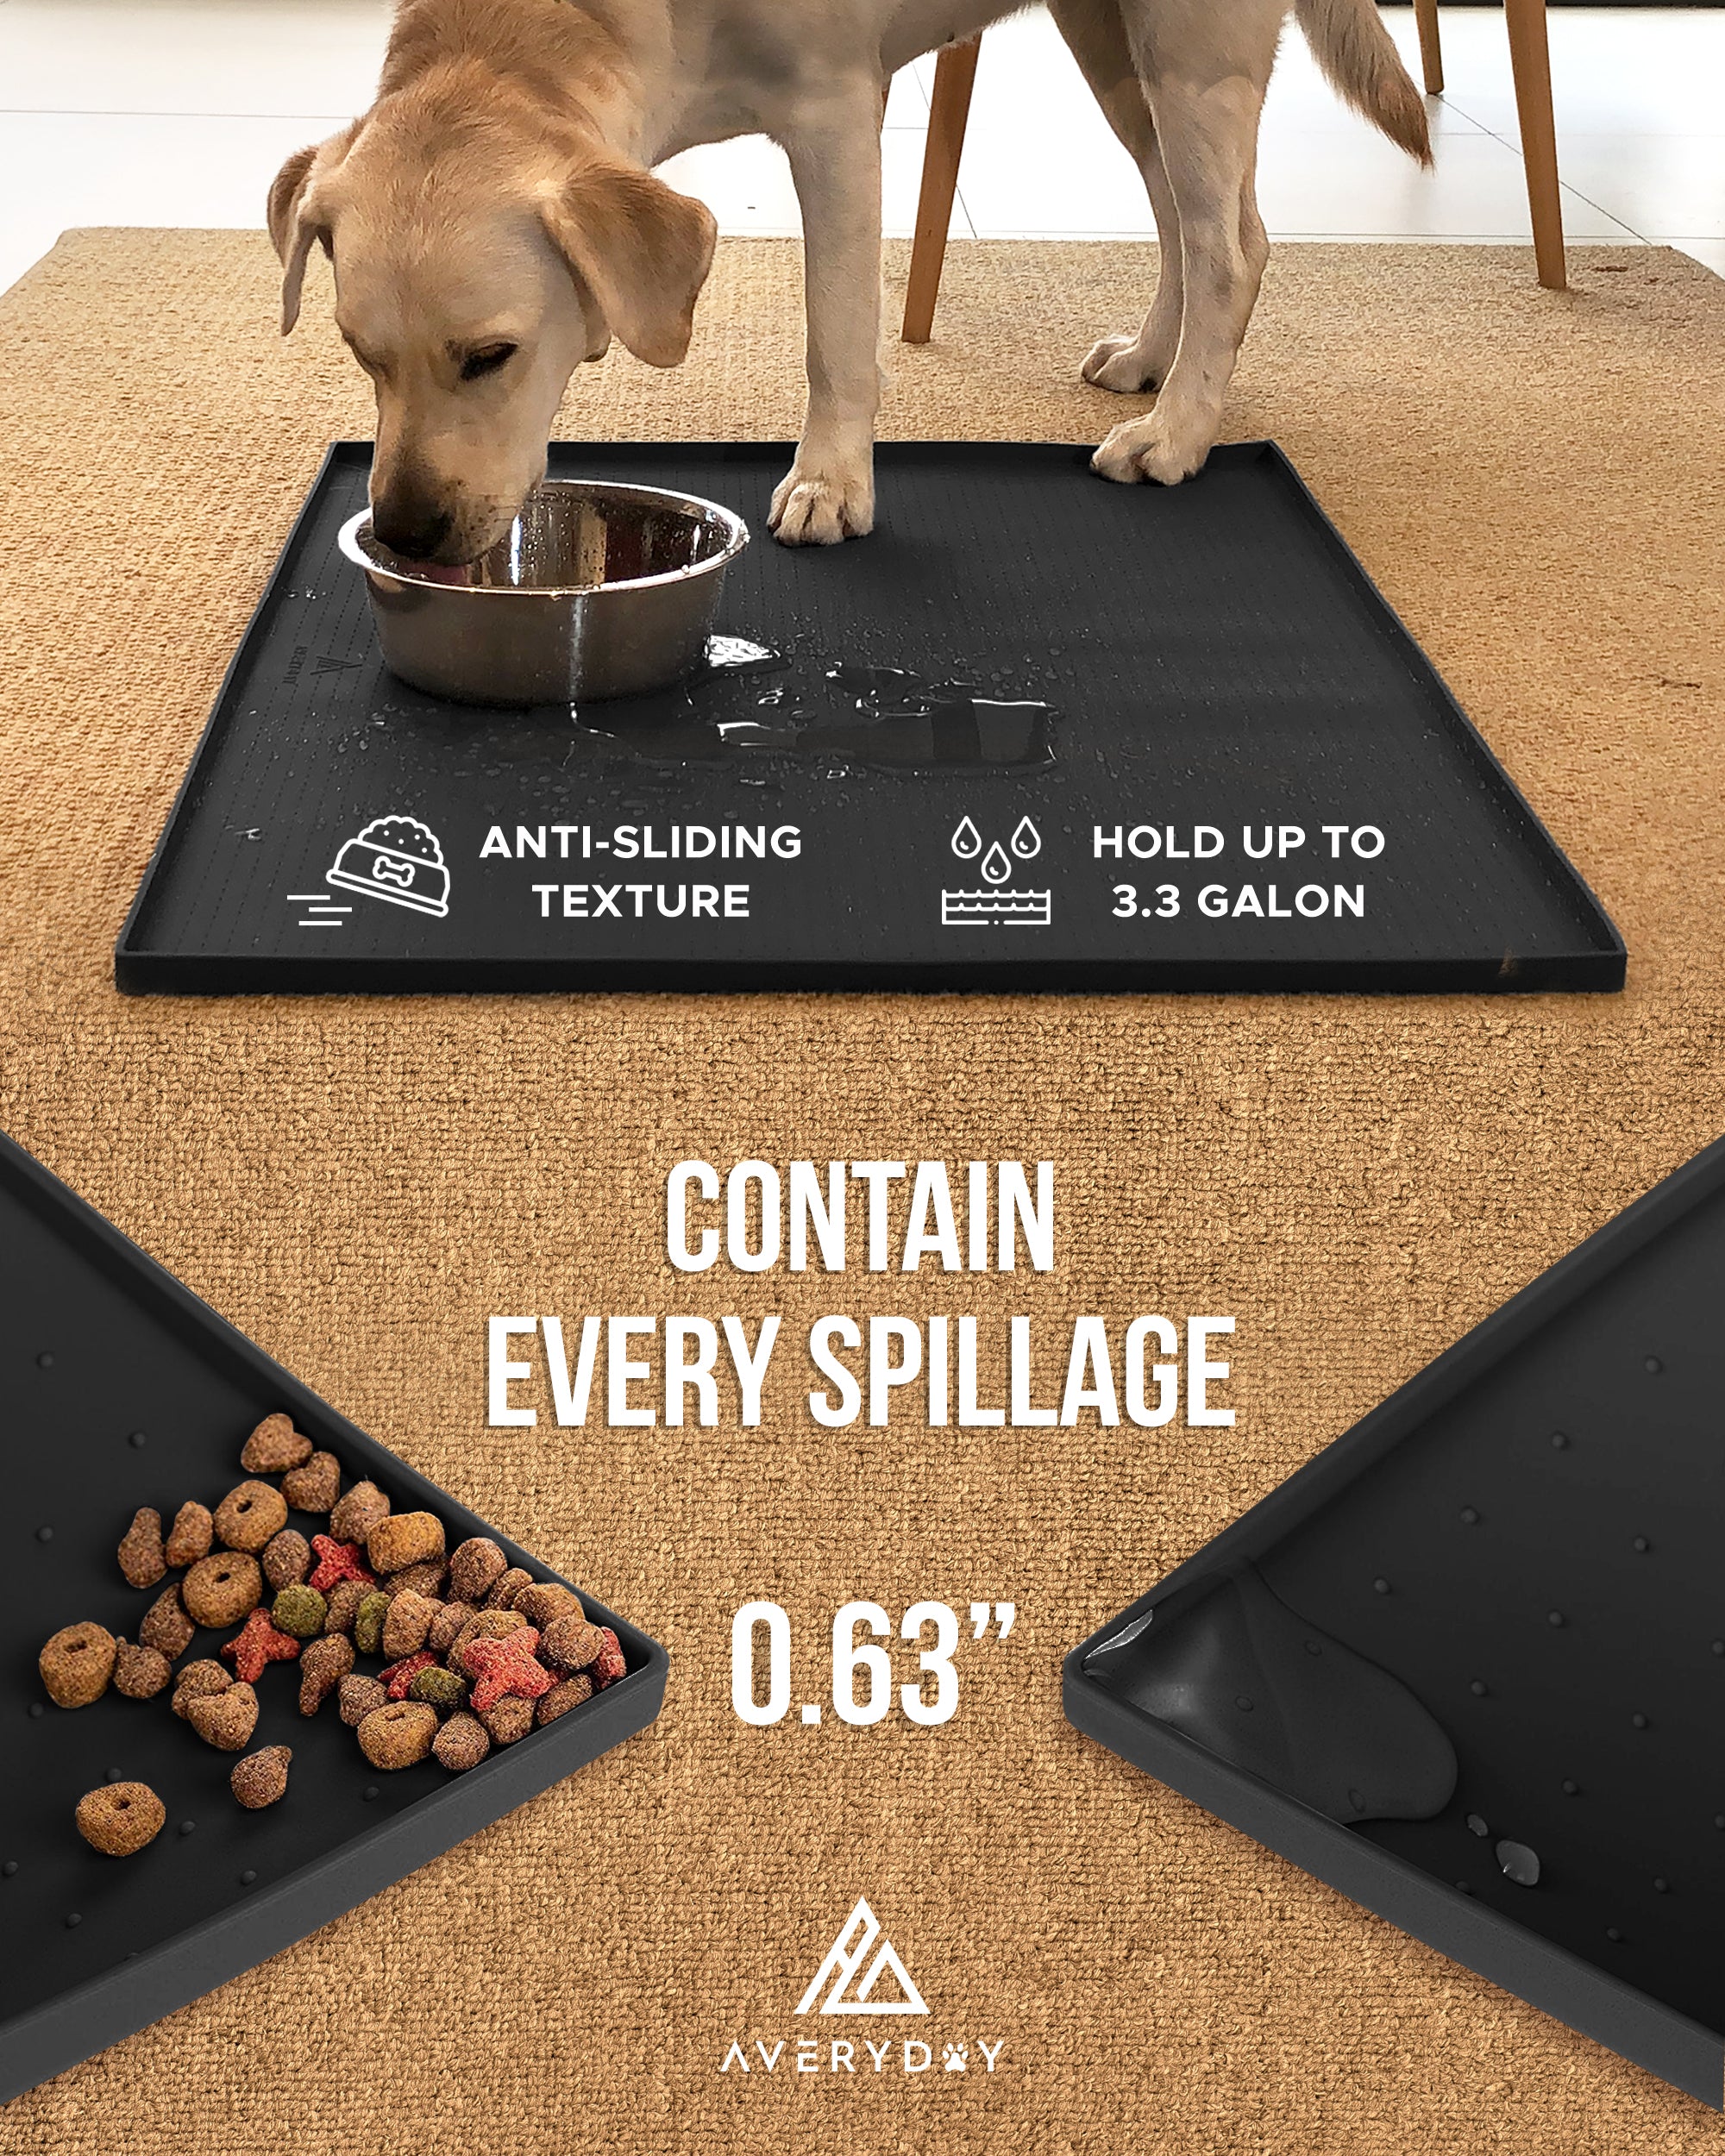 DogBuddy Dog Food Mat - Waterproof Dog Mat for Dog Bowls, Silicone Mat for  Dog Food and Water Bowl, Rubber Dog Bowl Mat with Edges, Nonslip Pet Food